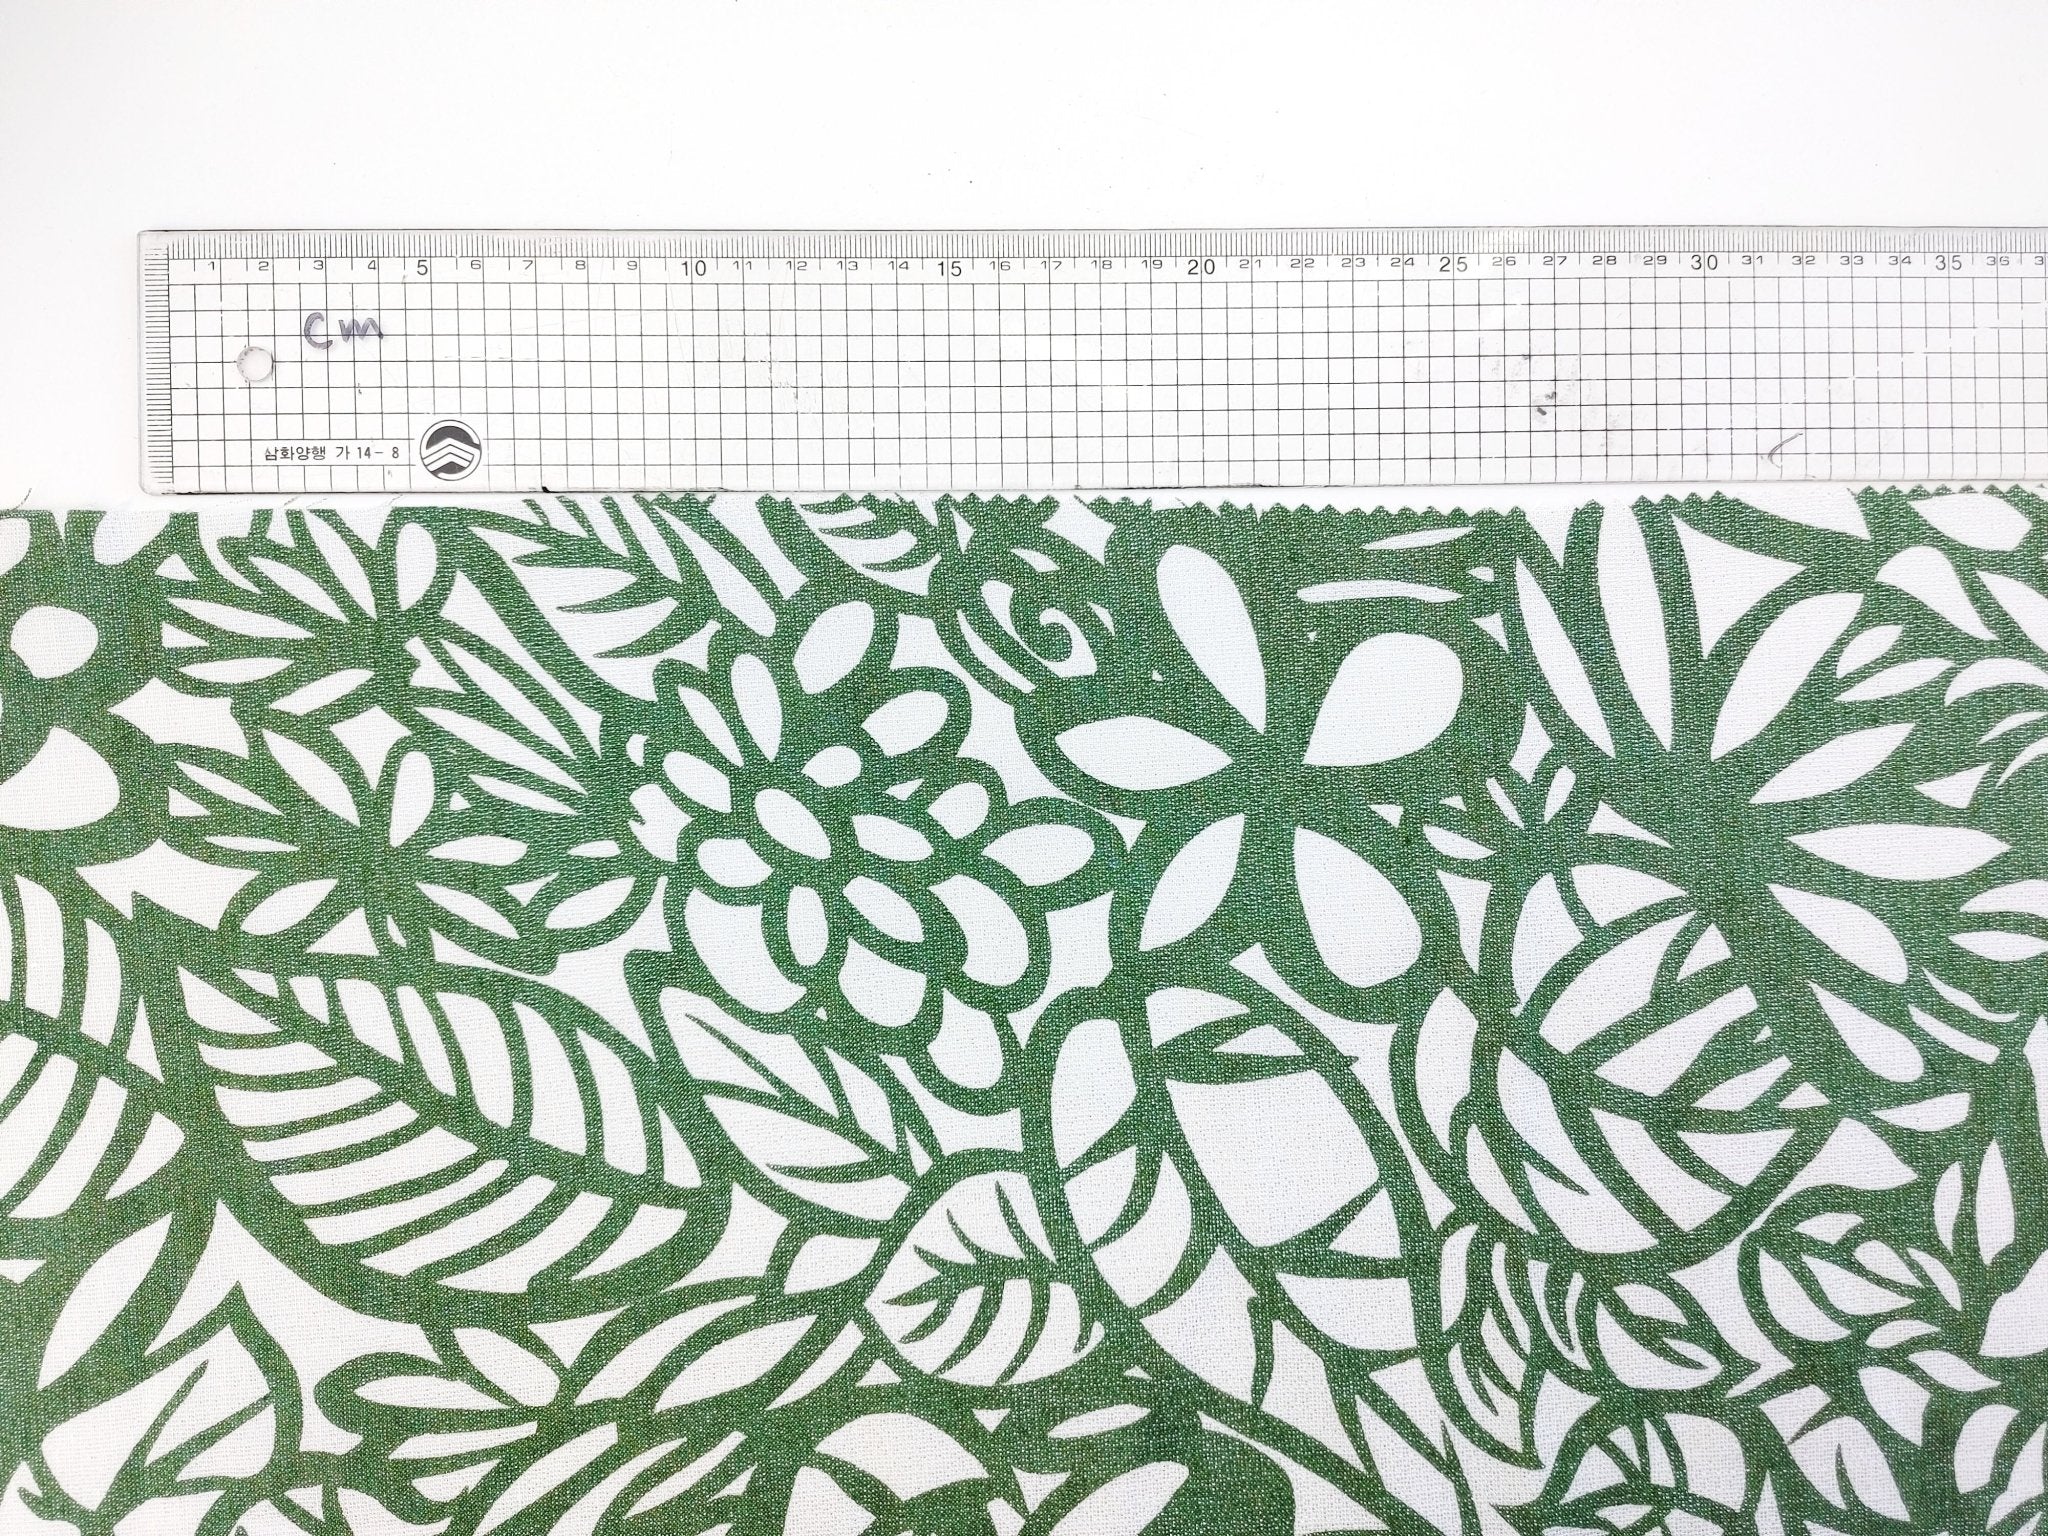 Linen Tencel Lurex Blend Fabric in Green Leaf Print 4082 - The Linen Lab - Green